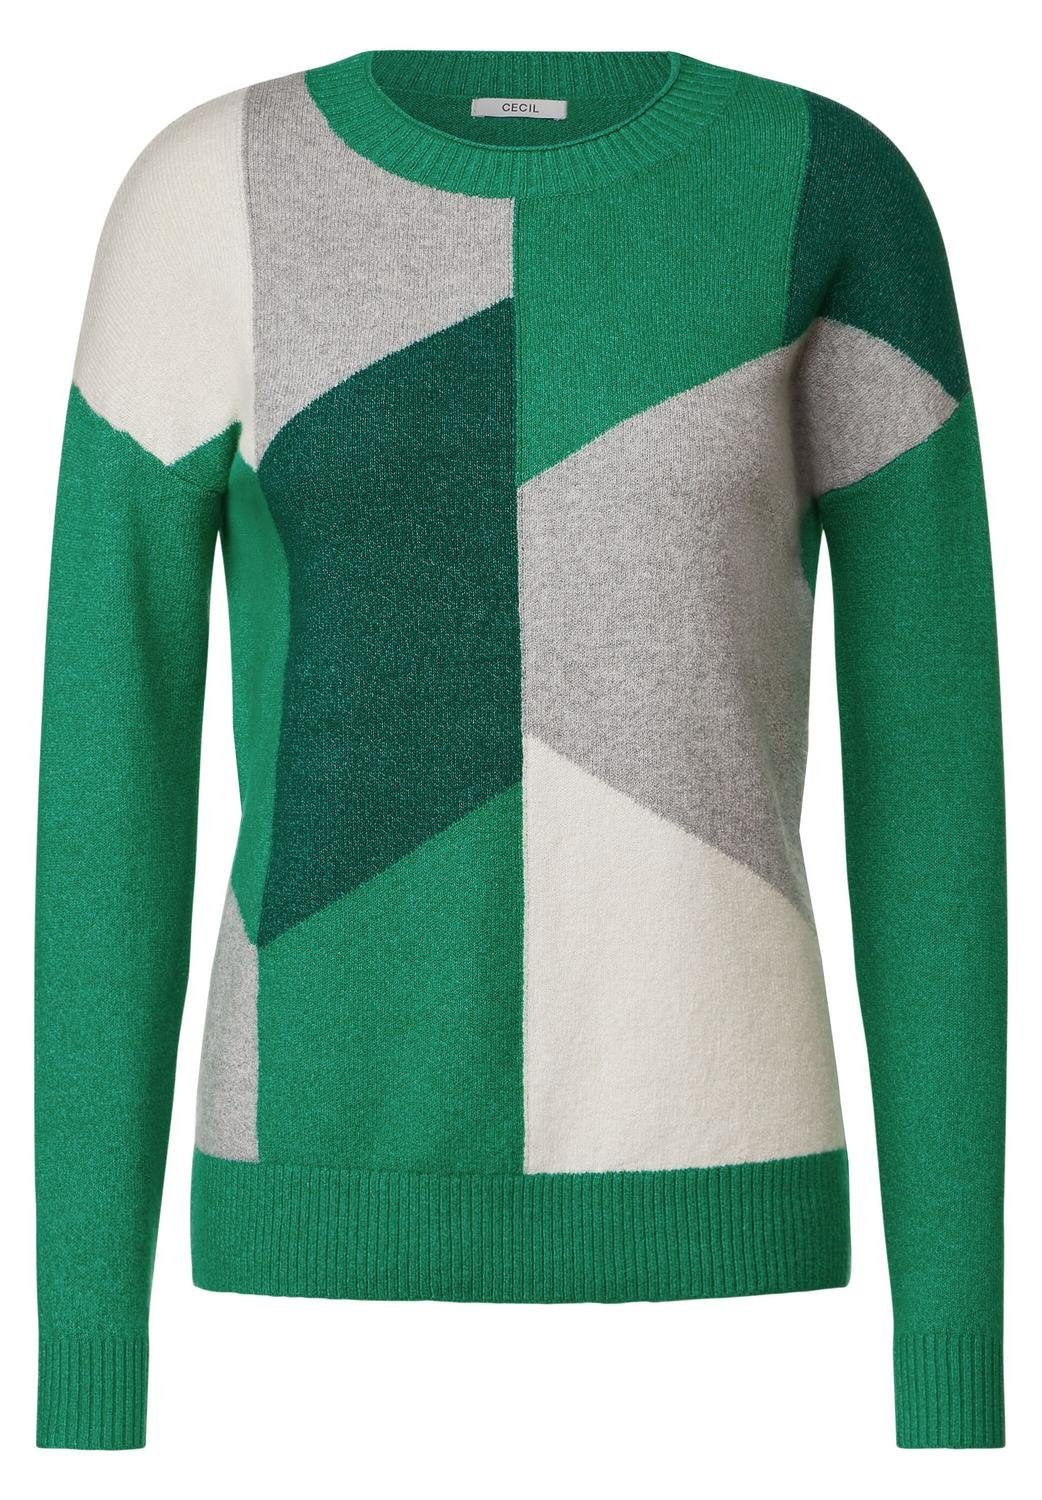 Sweatshirt bright Pattern Cecil green melange Pullover Geometric